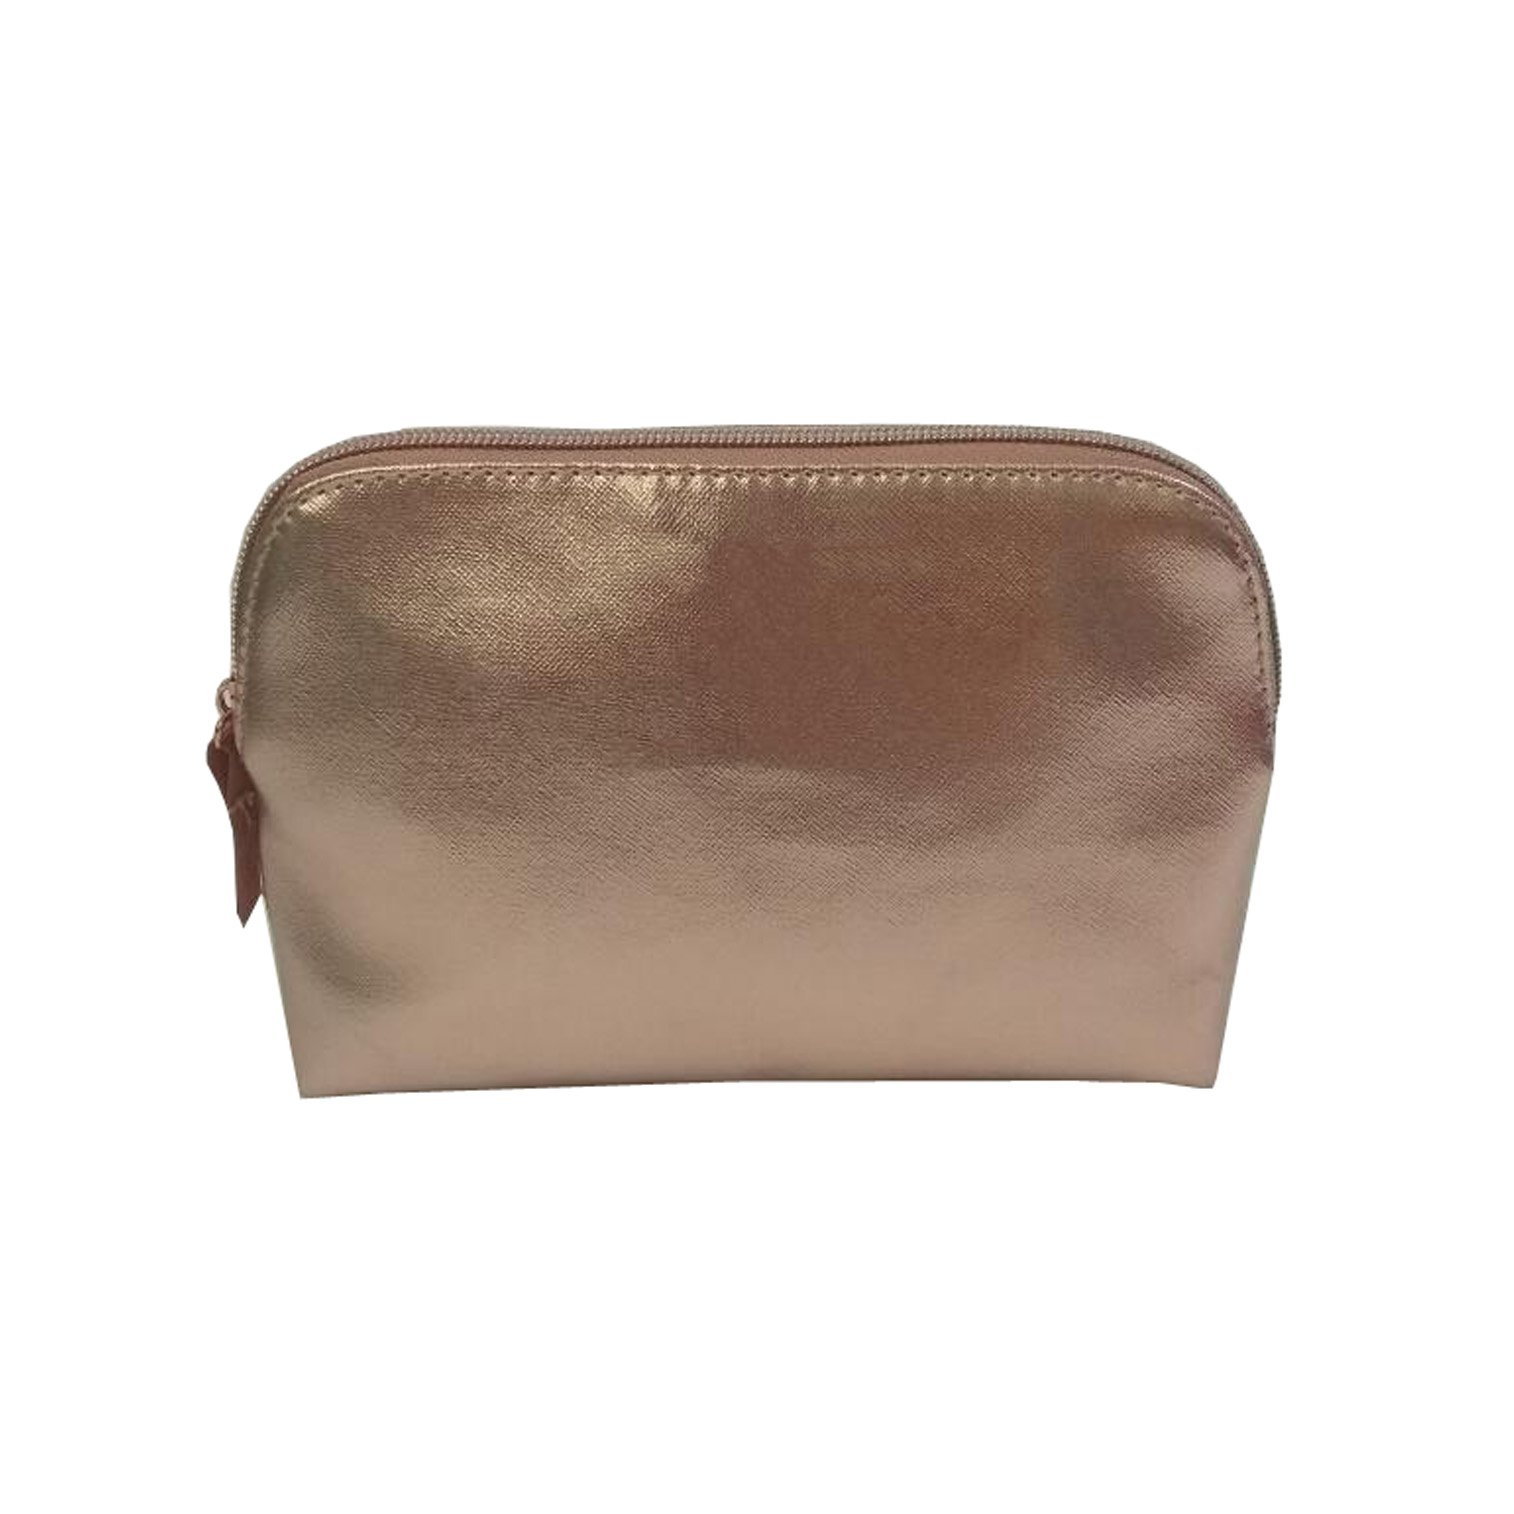 GL-AAD1069 PU Shell Cosmetic Bag